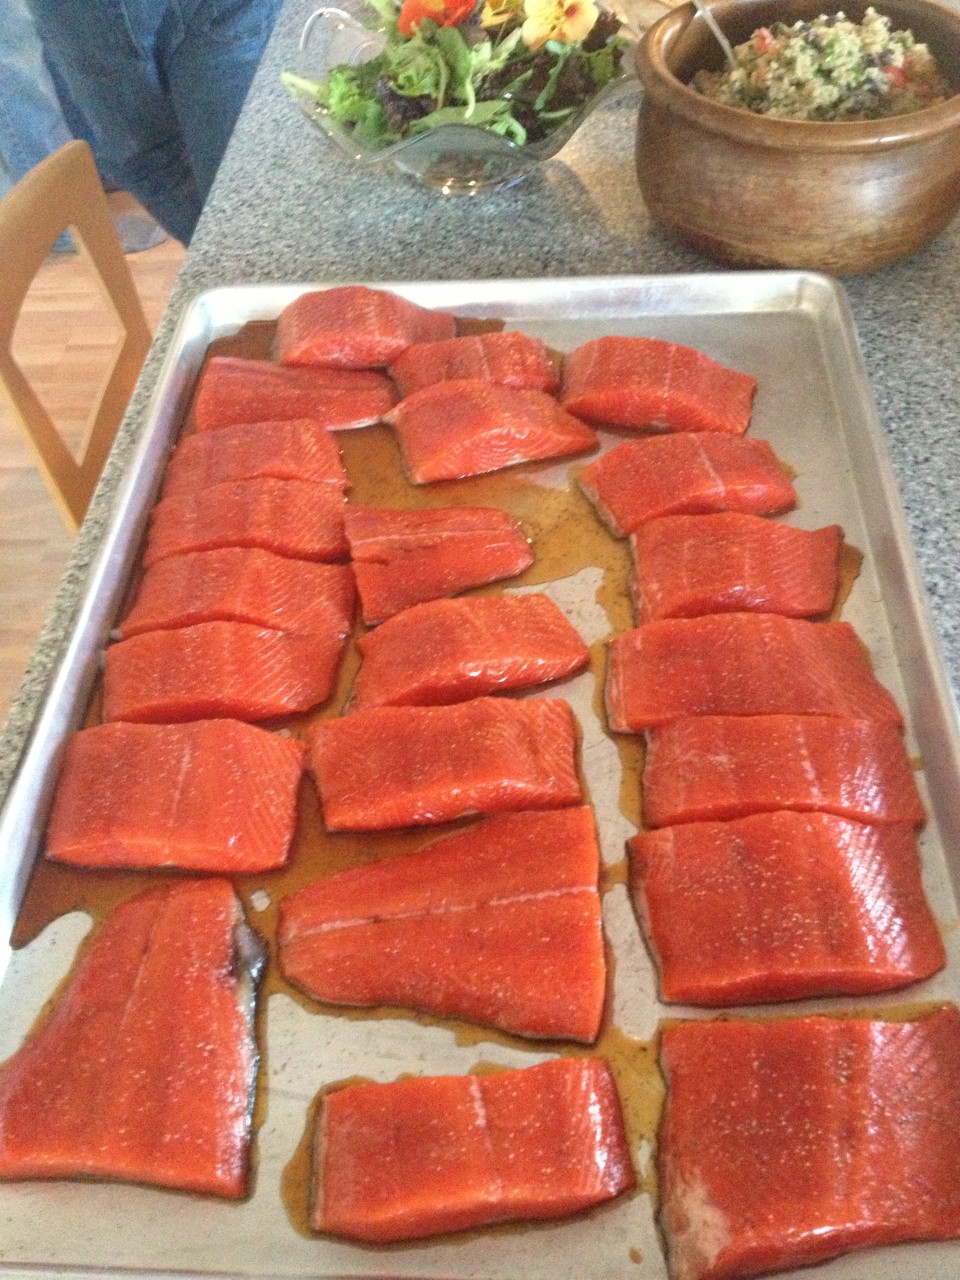 Lot's of salmon for dinner!